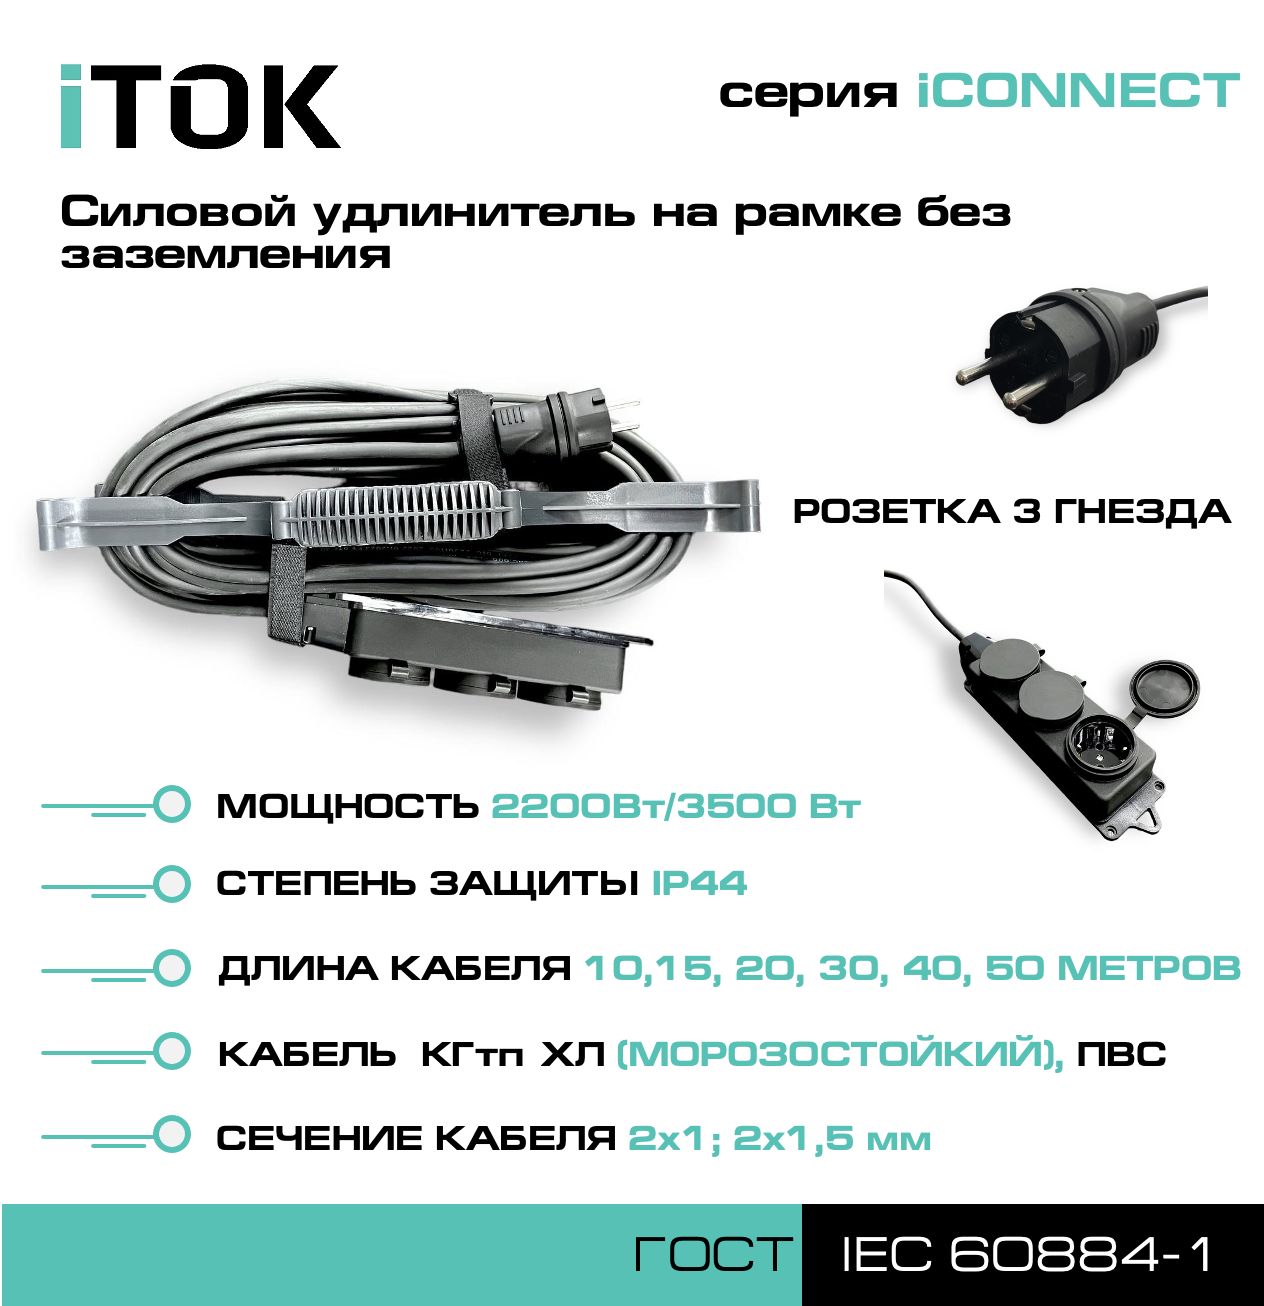 Удлинитель на рамке без земли серии iTOK iCONNECT ПВС 2х1,5 мм 3 гнезда IP44 30 м